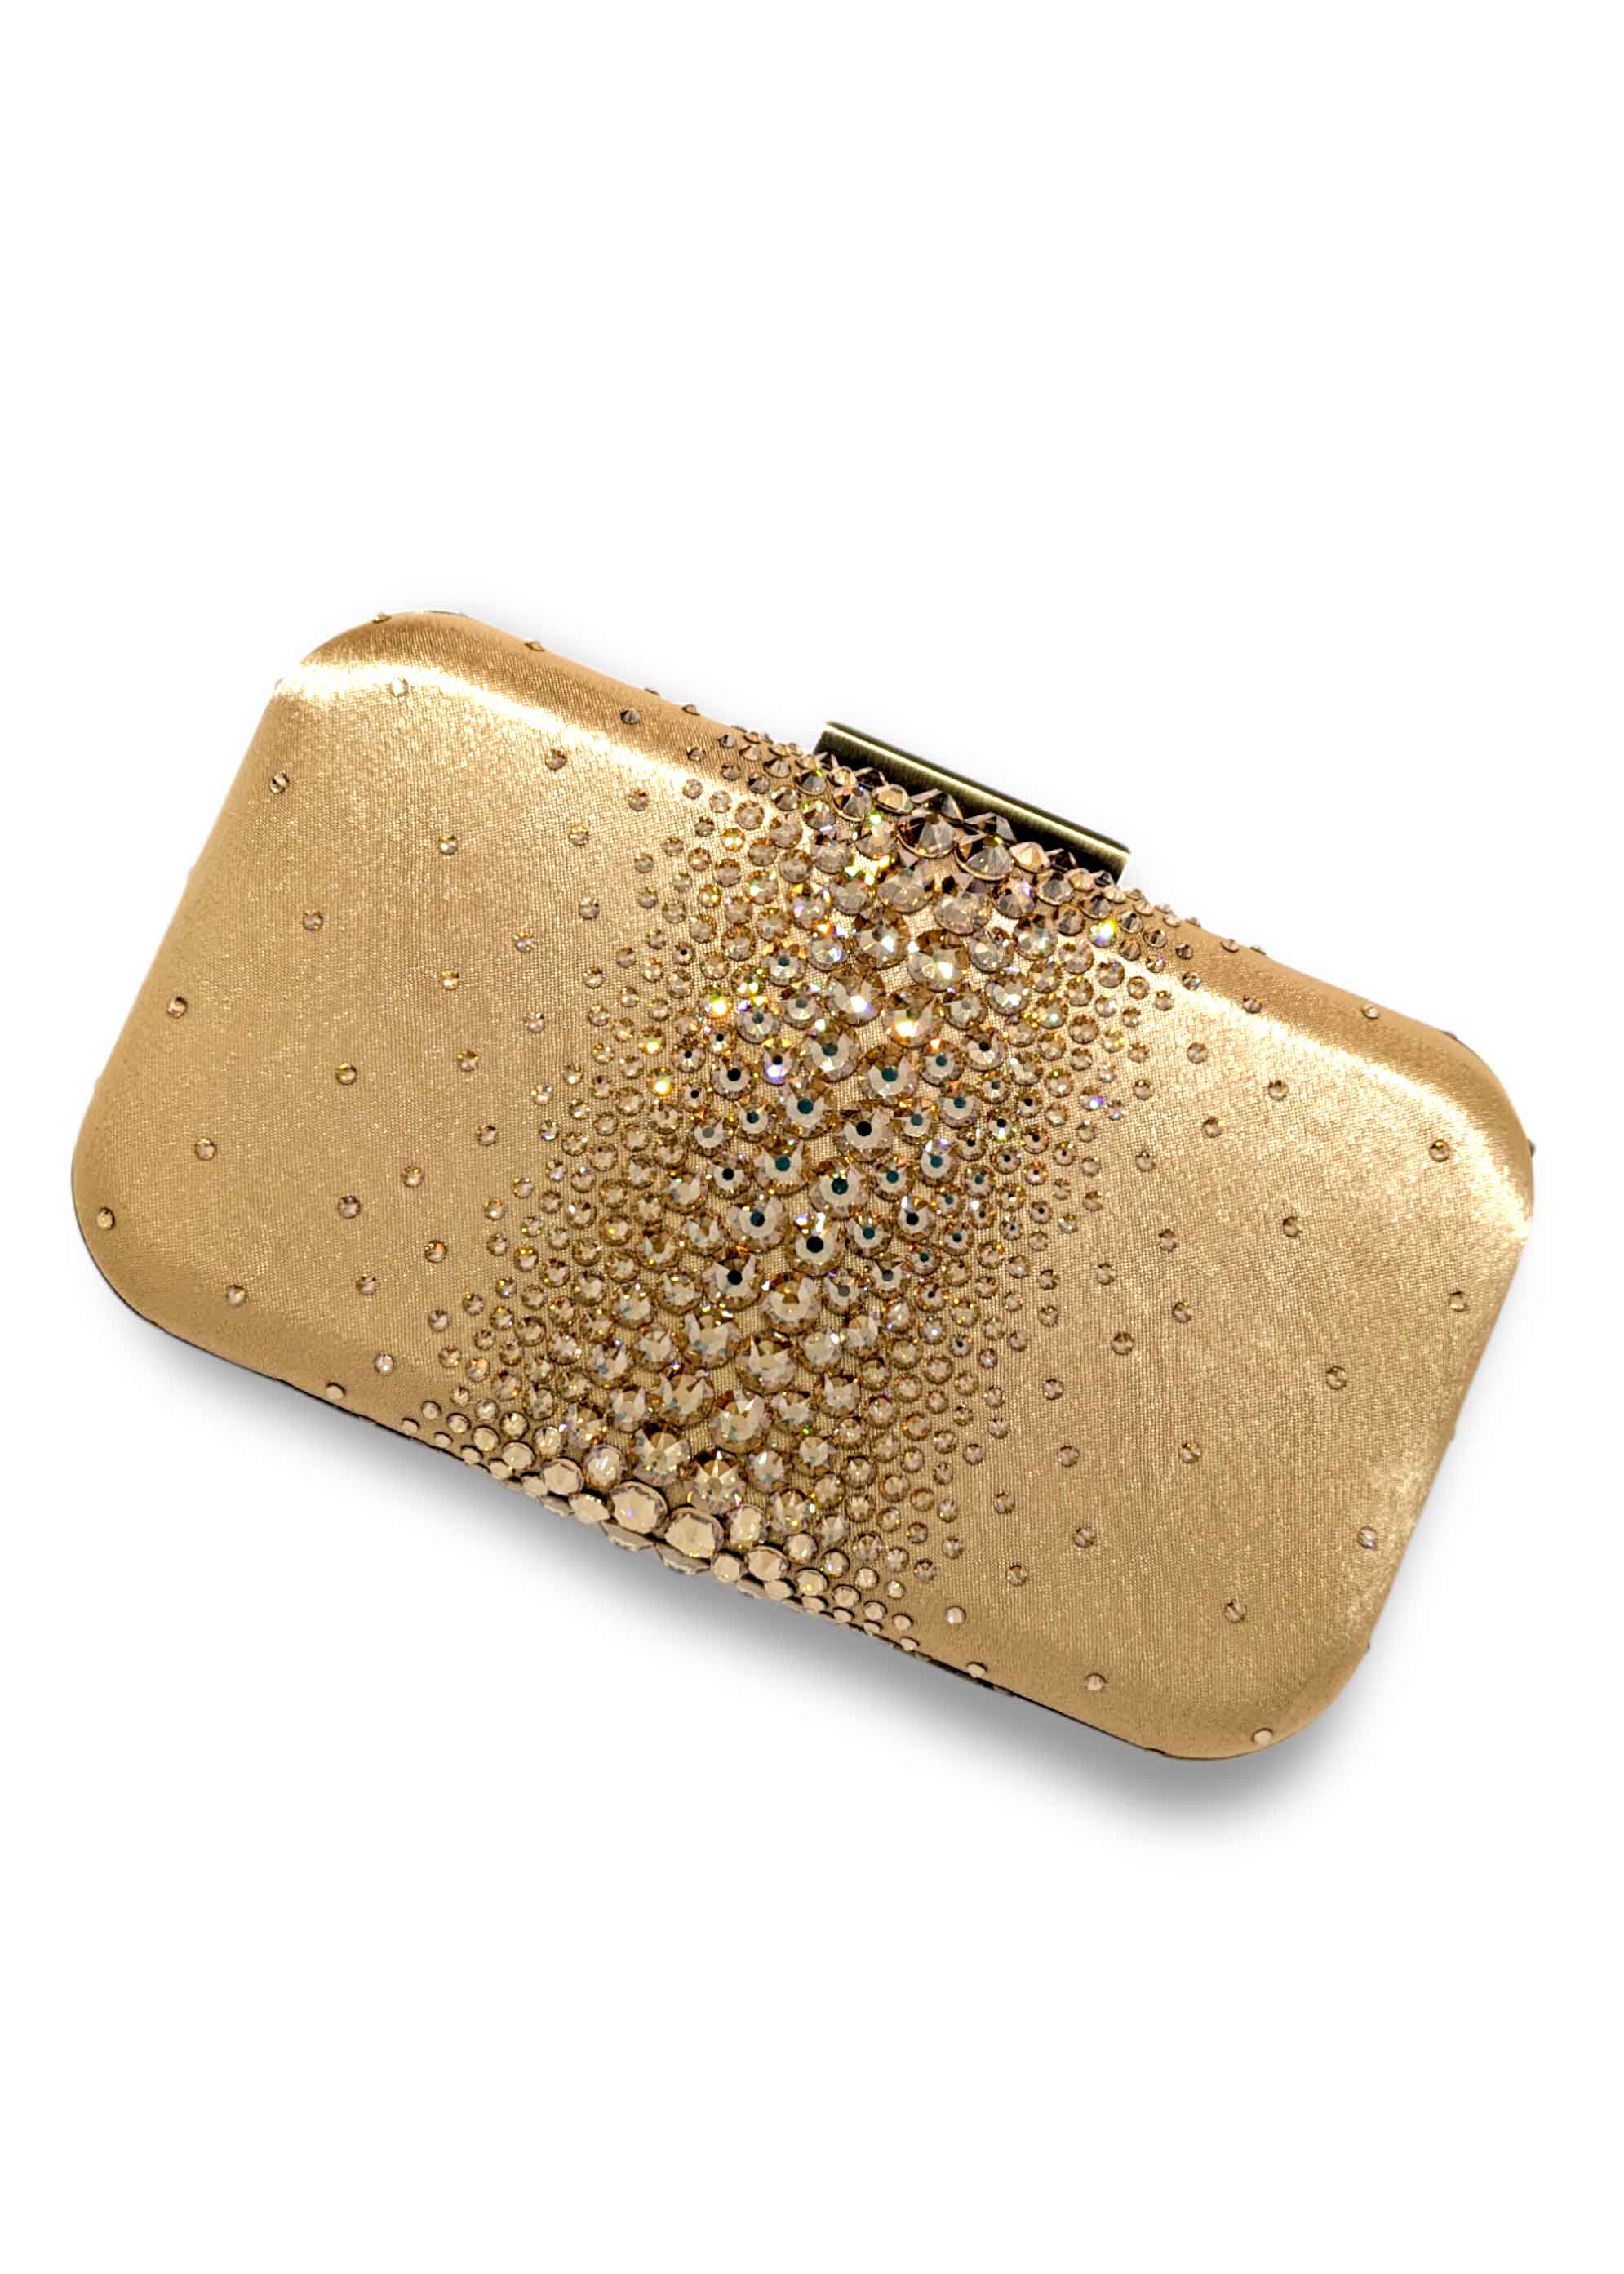 Ella Gold Clutch | Ariel Taub Luxury Accessories